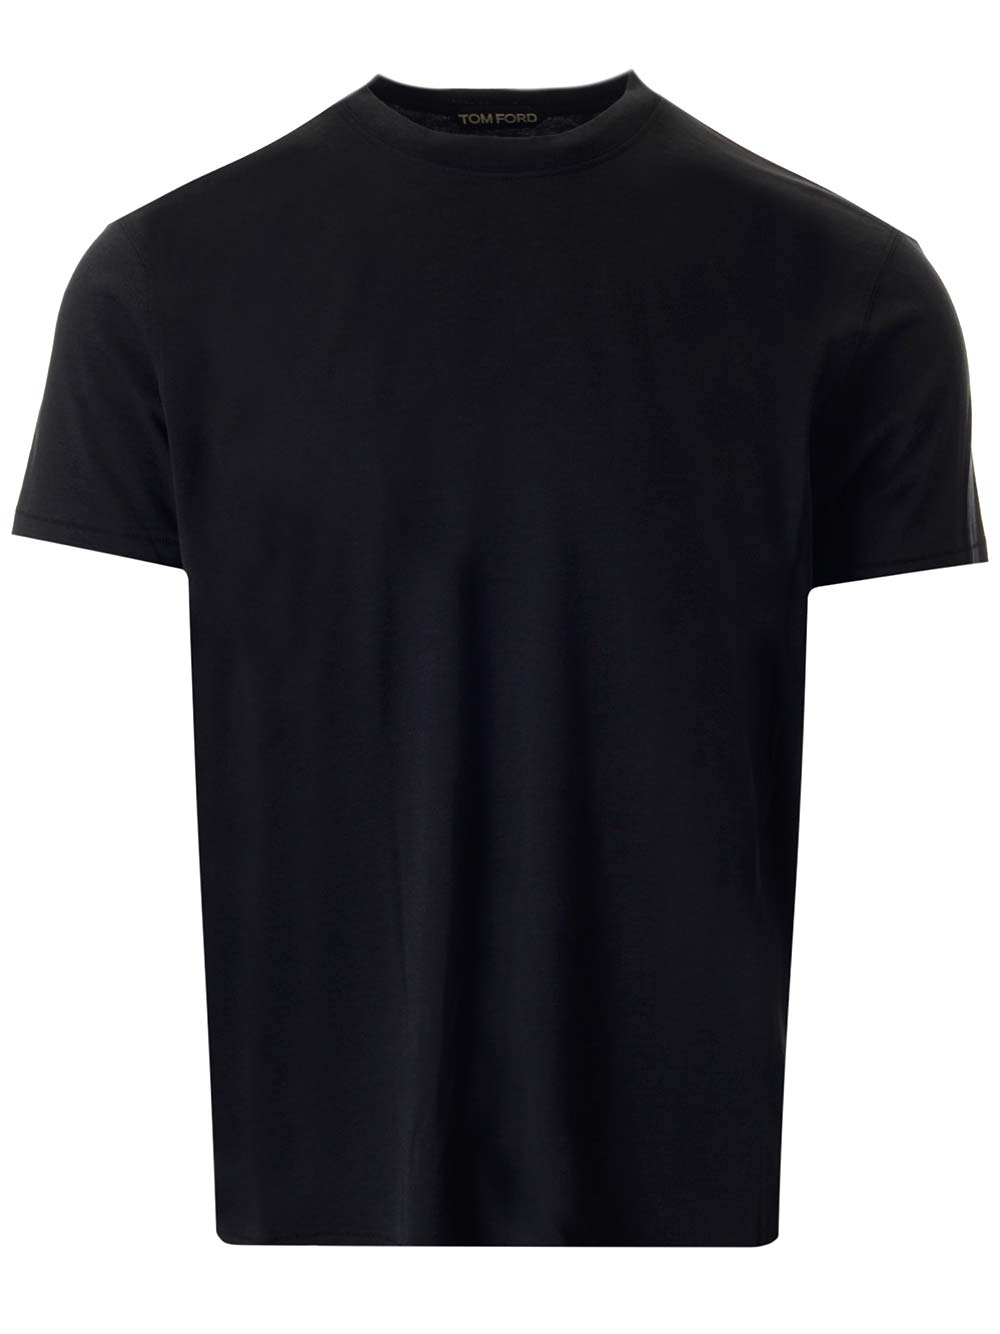 Shop Tom Ford Black T-shirt